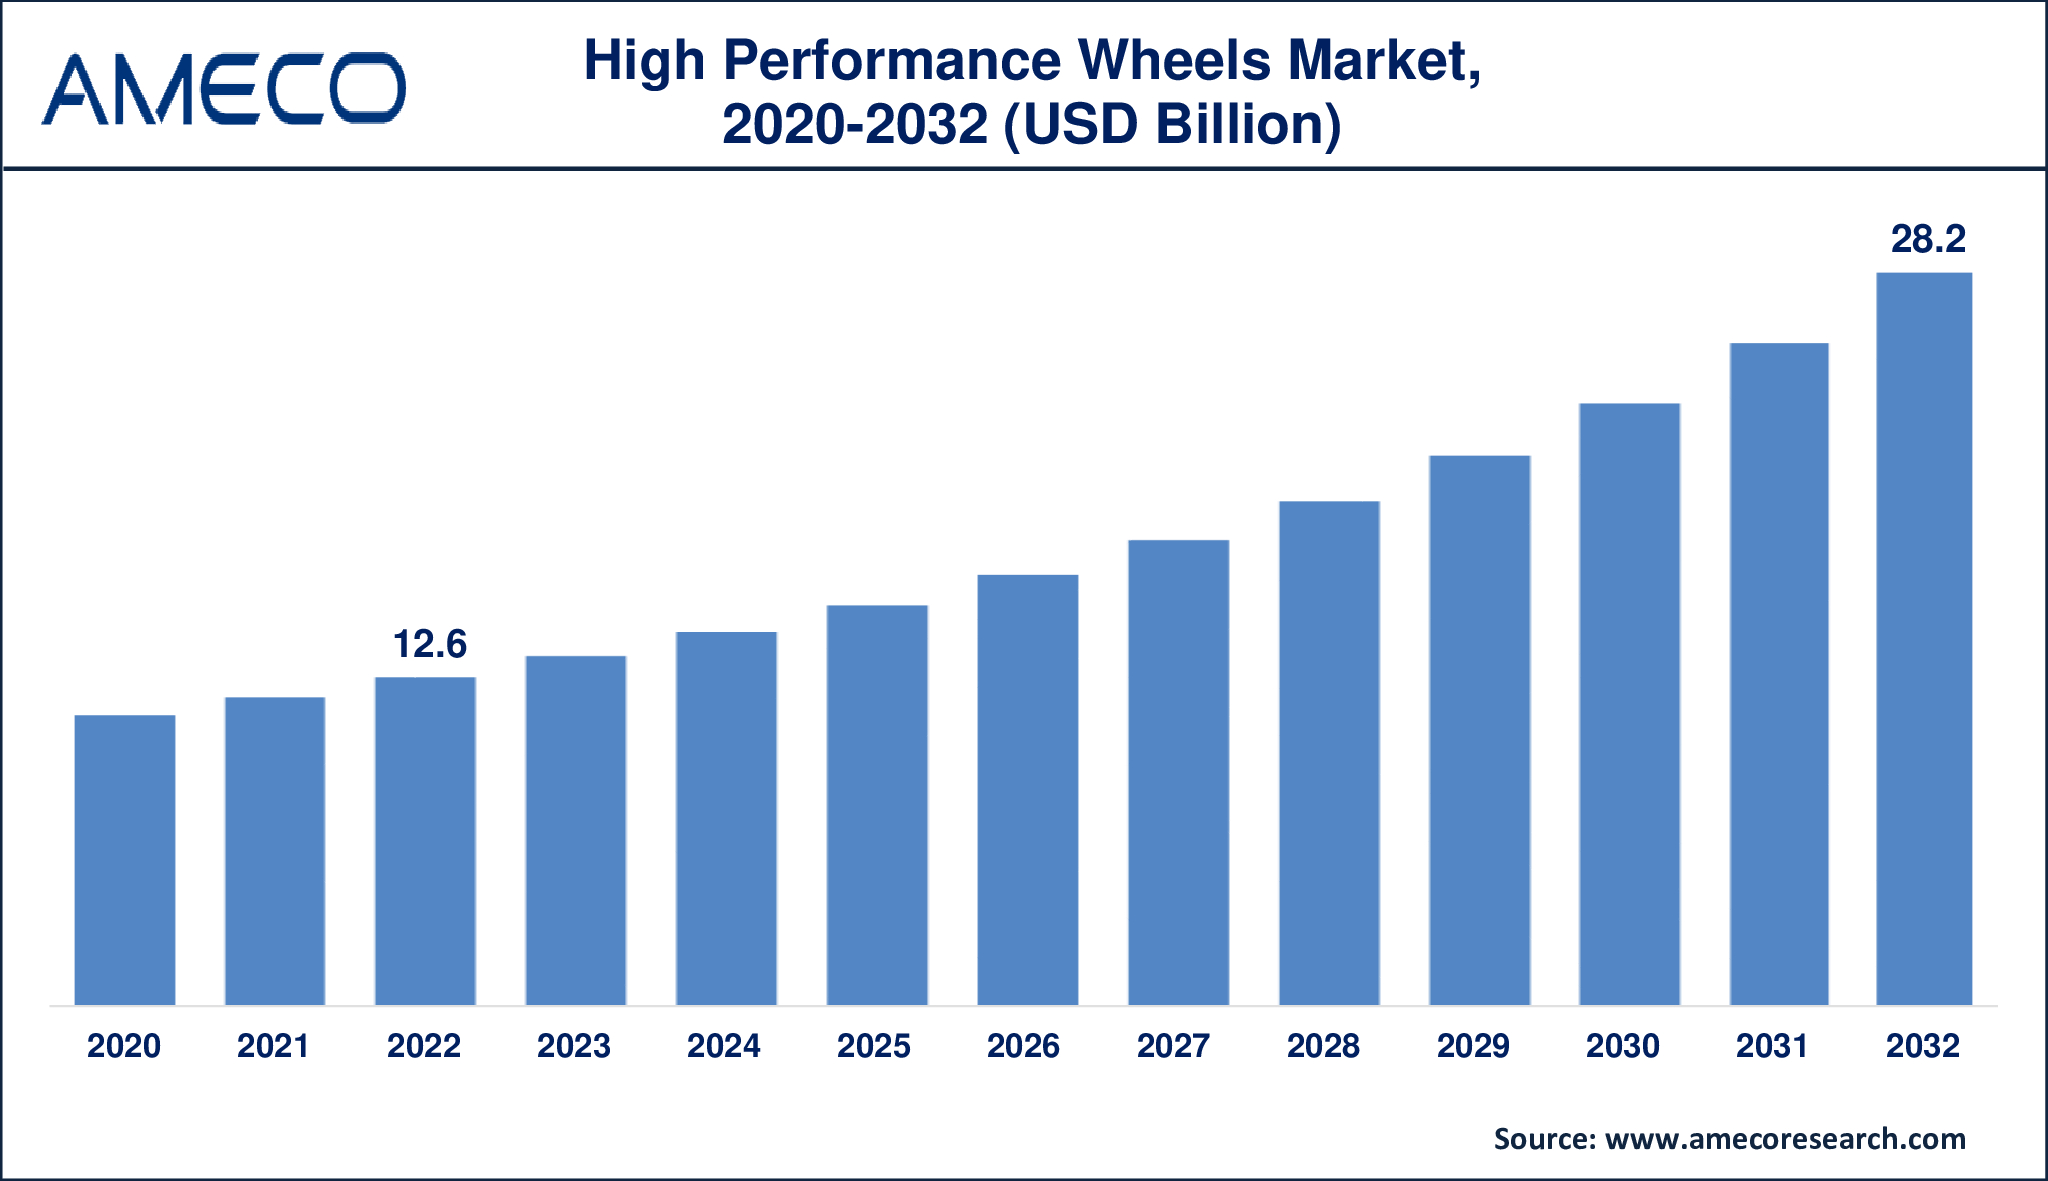 High Performance Wheels Market Dynamics